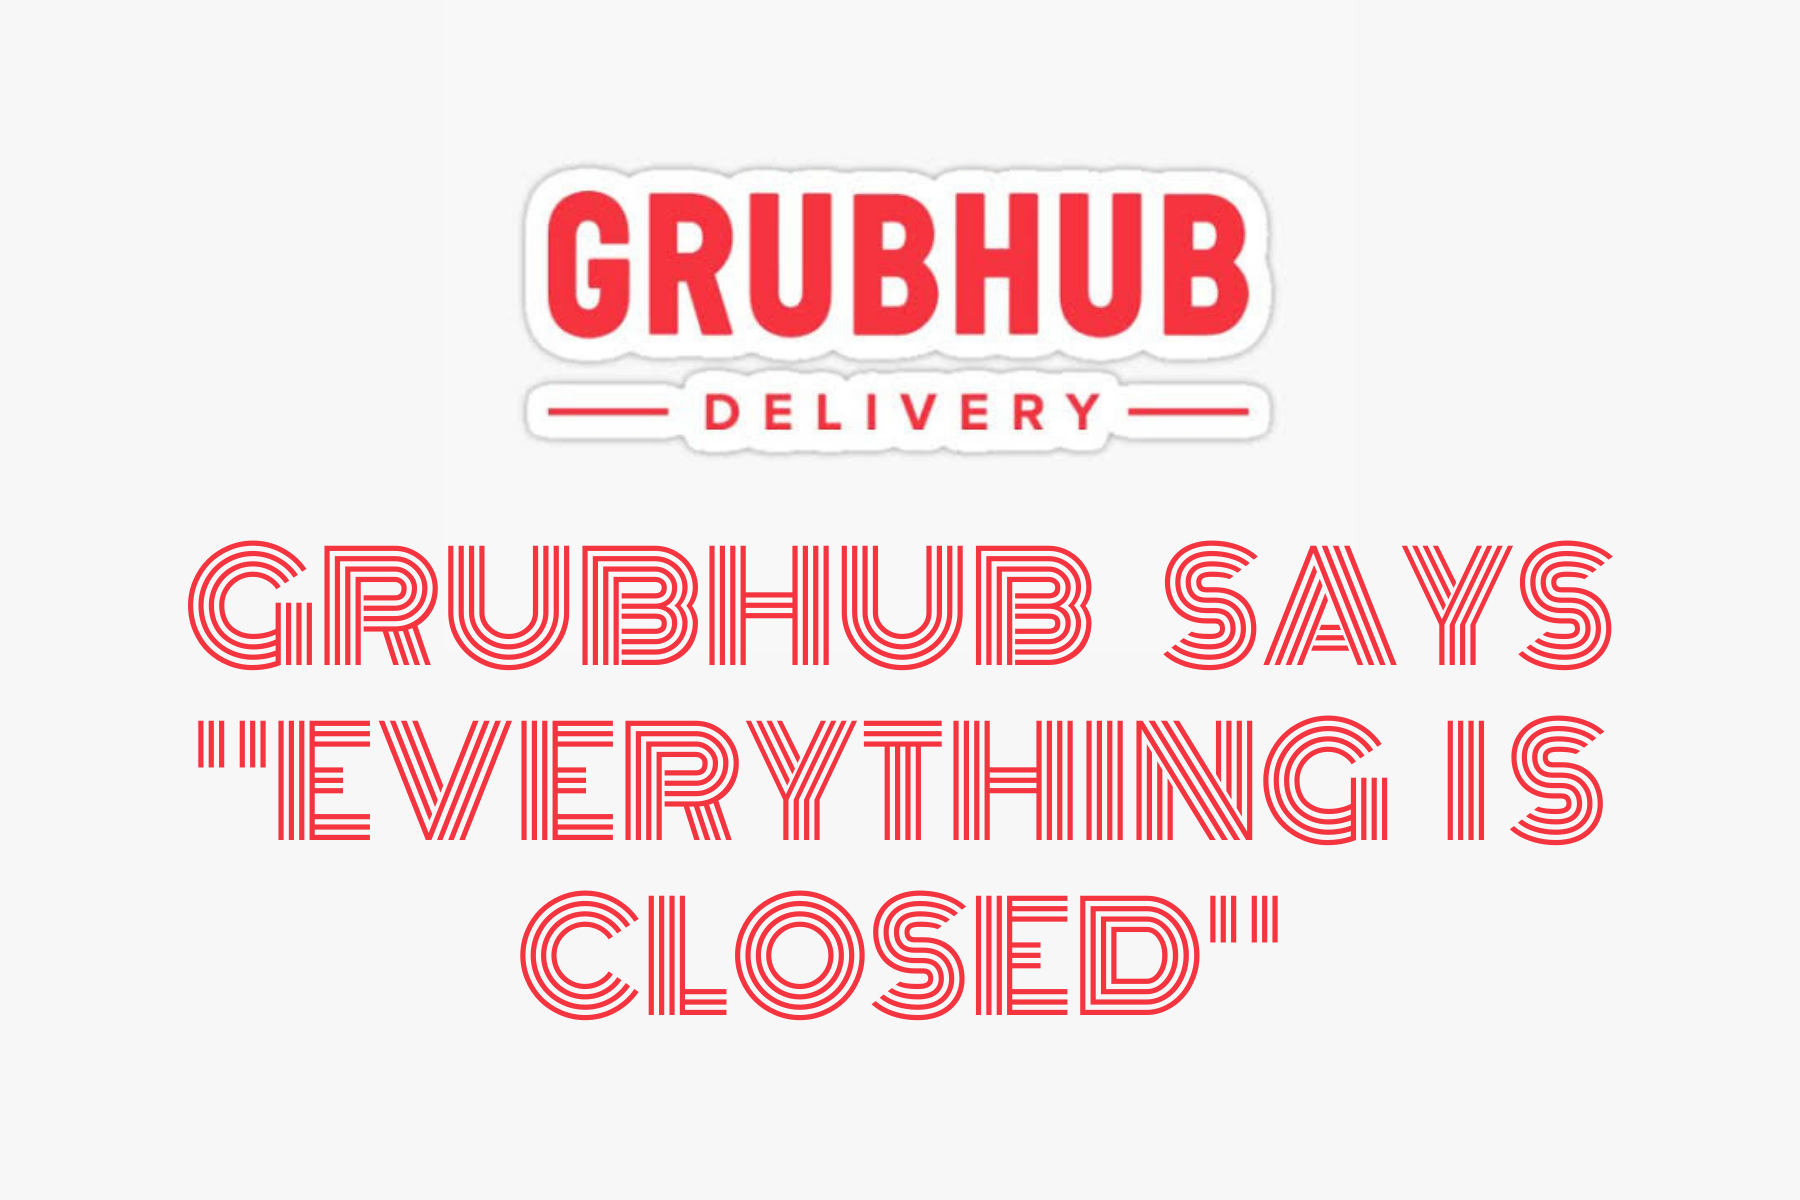 Grubhub say everything is closed